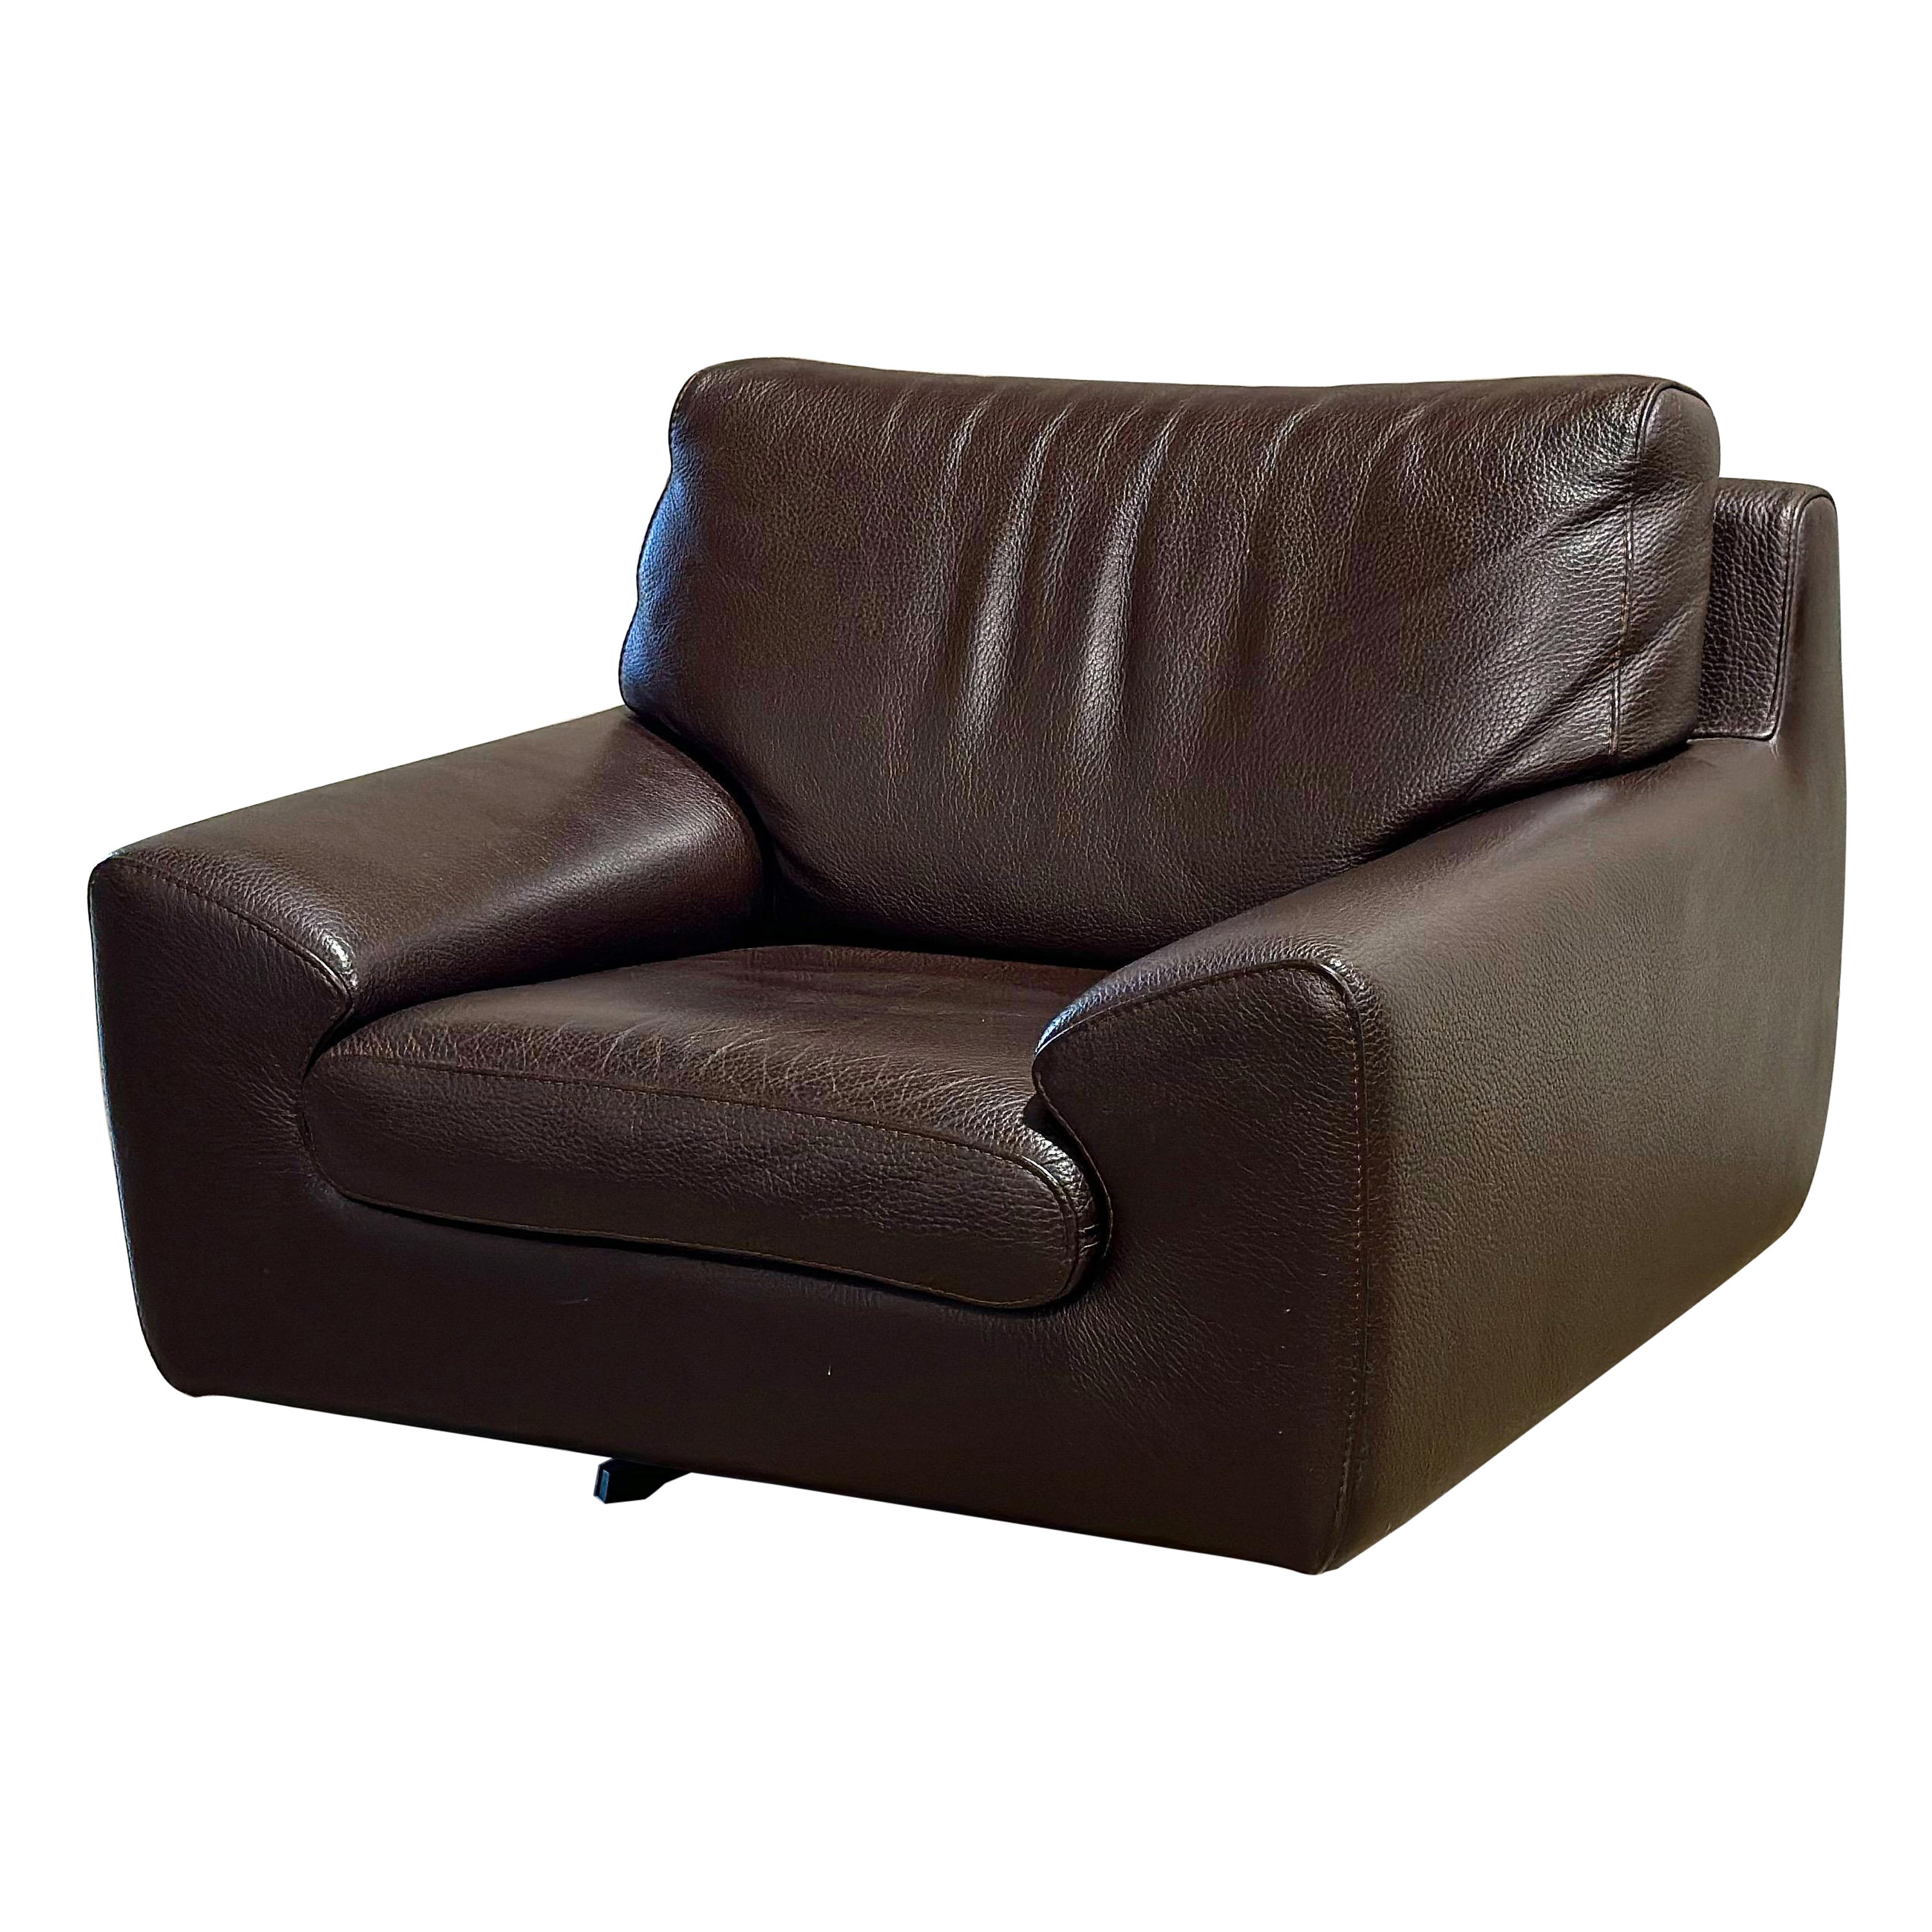 Vintage Roche Bobois Leather Swivel Lounge Chair - Dark Ox Blood Maroon Brown